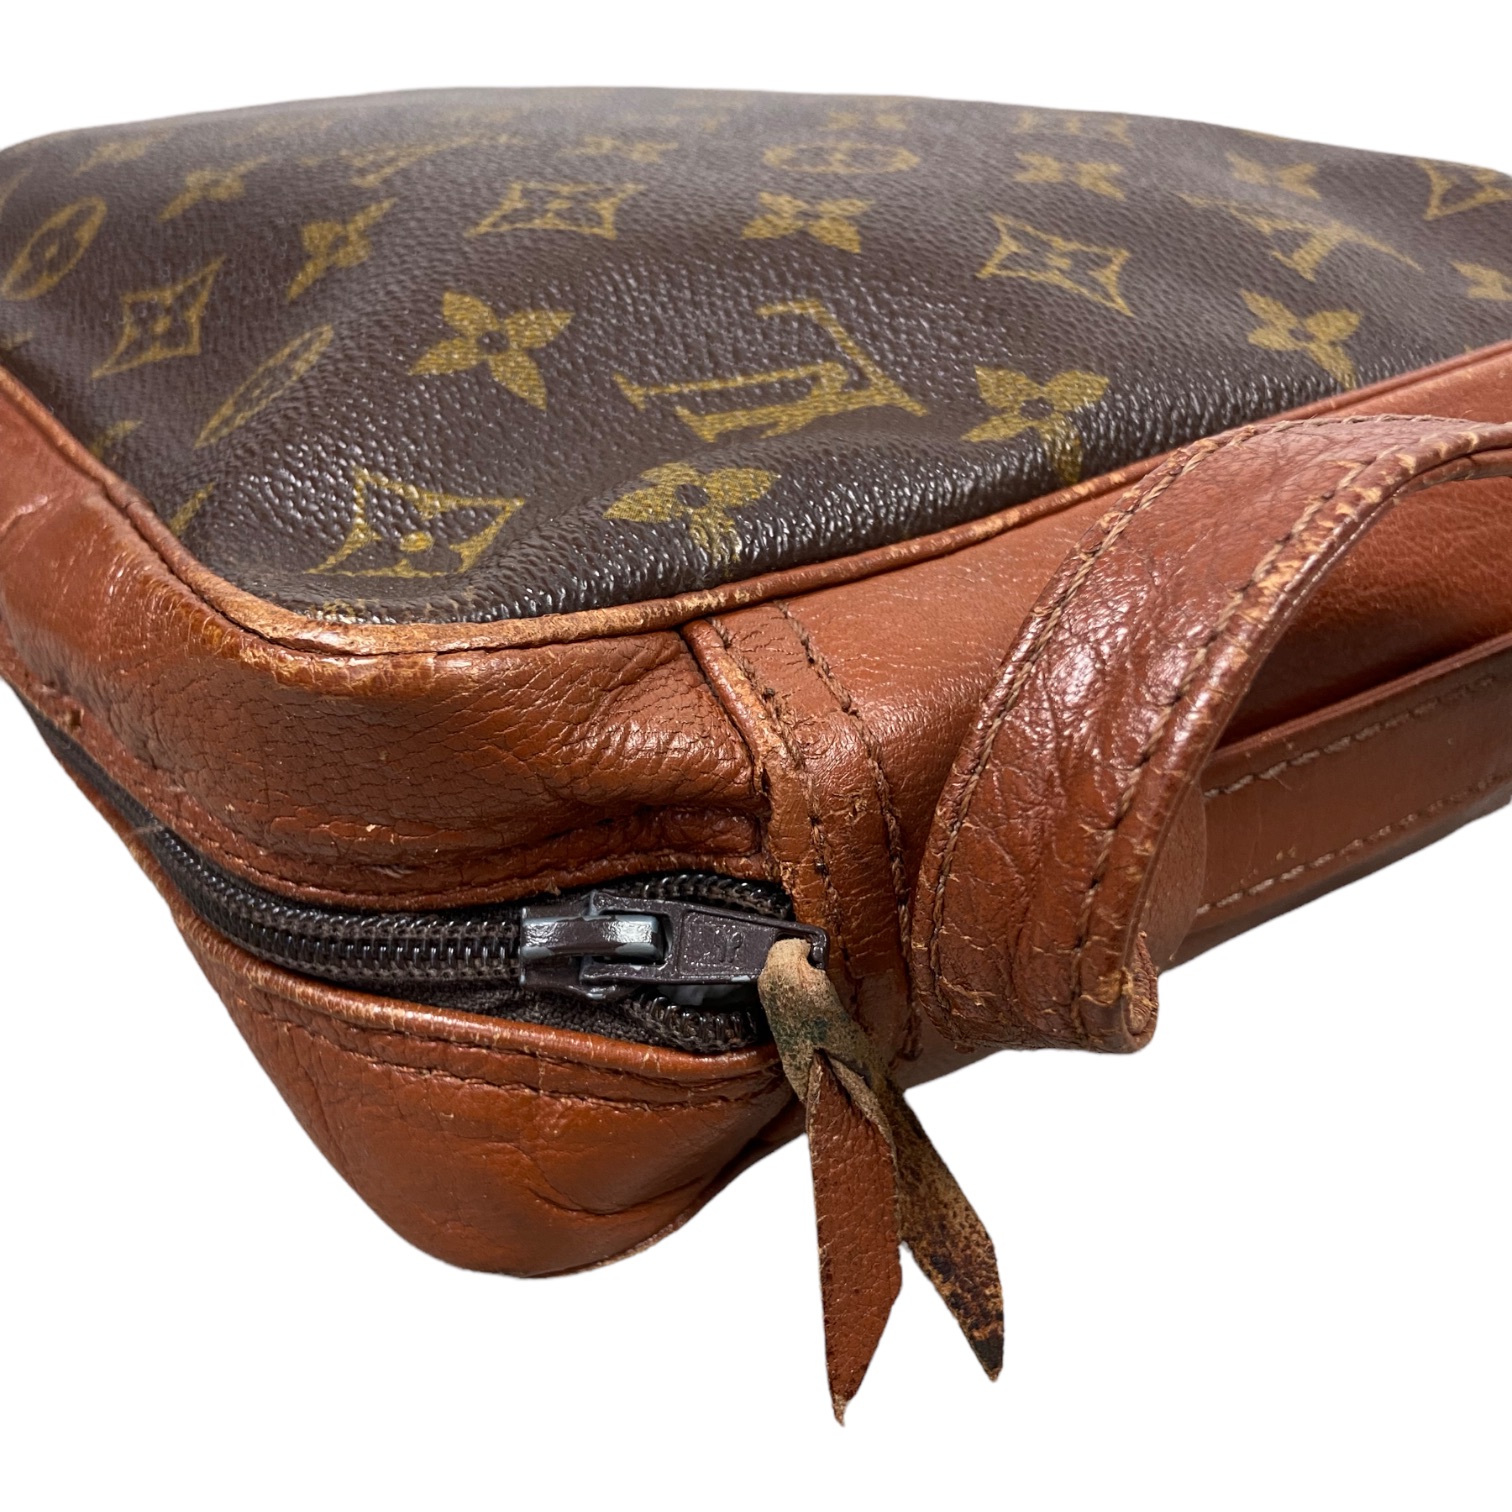 Louis Vuitton Side Messenger Bag